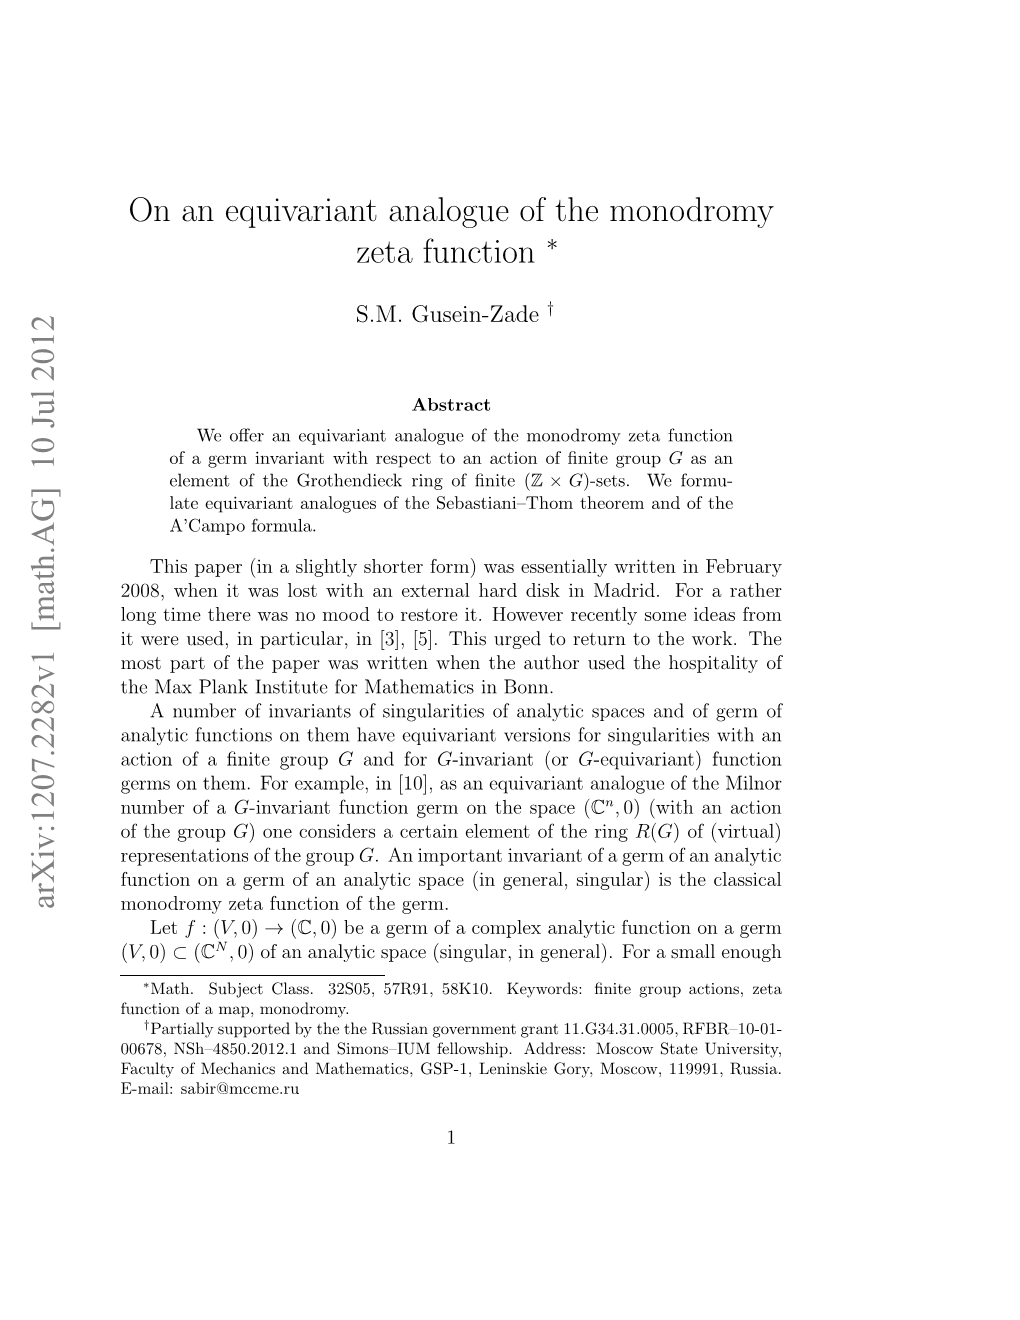 On an Equivariant Analogue of the Monodromy Zeta Function